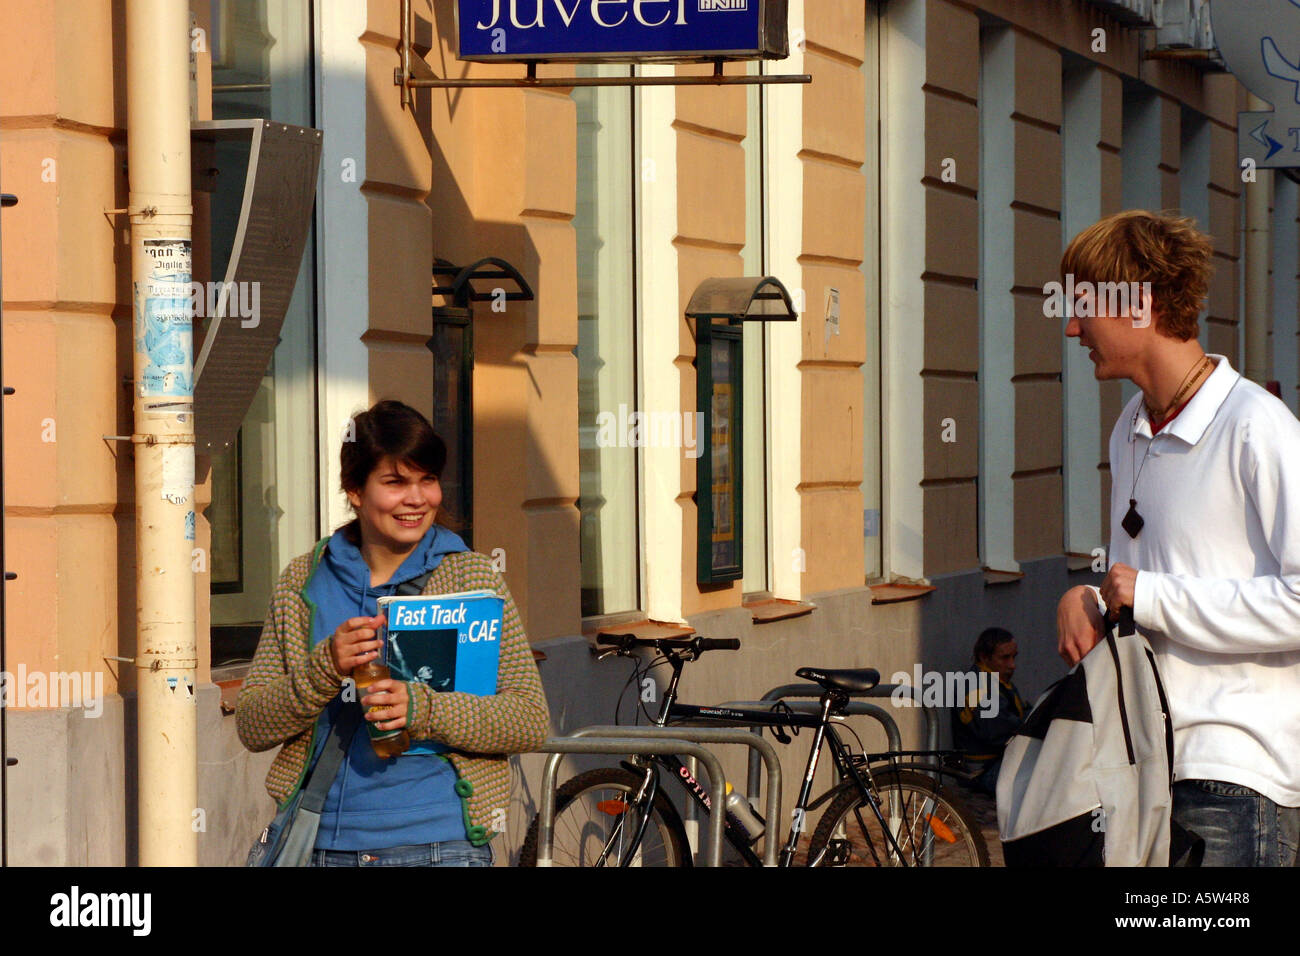 STUDENTS IN TARTU CITY CENTRE in Estonia Stock Photo